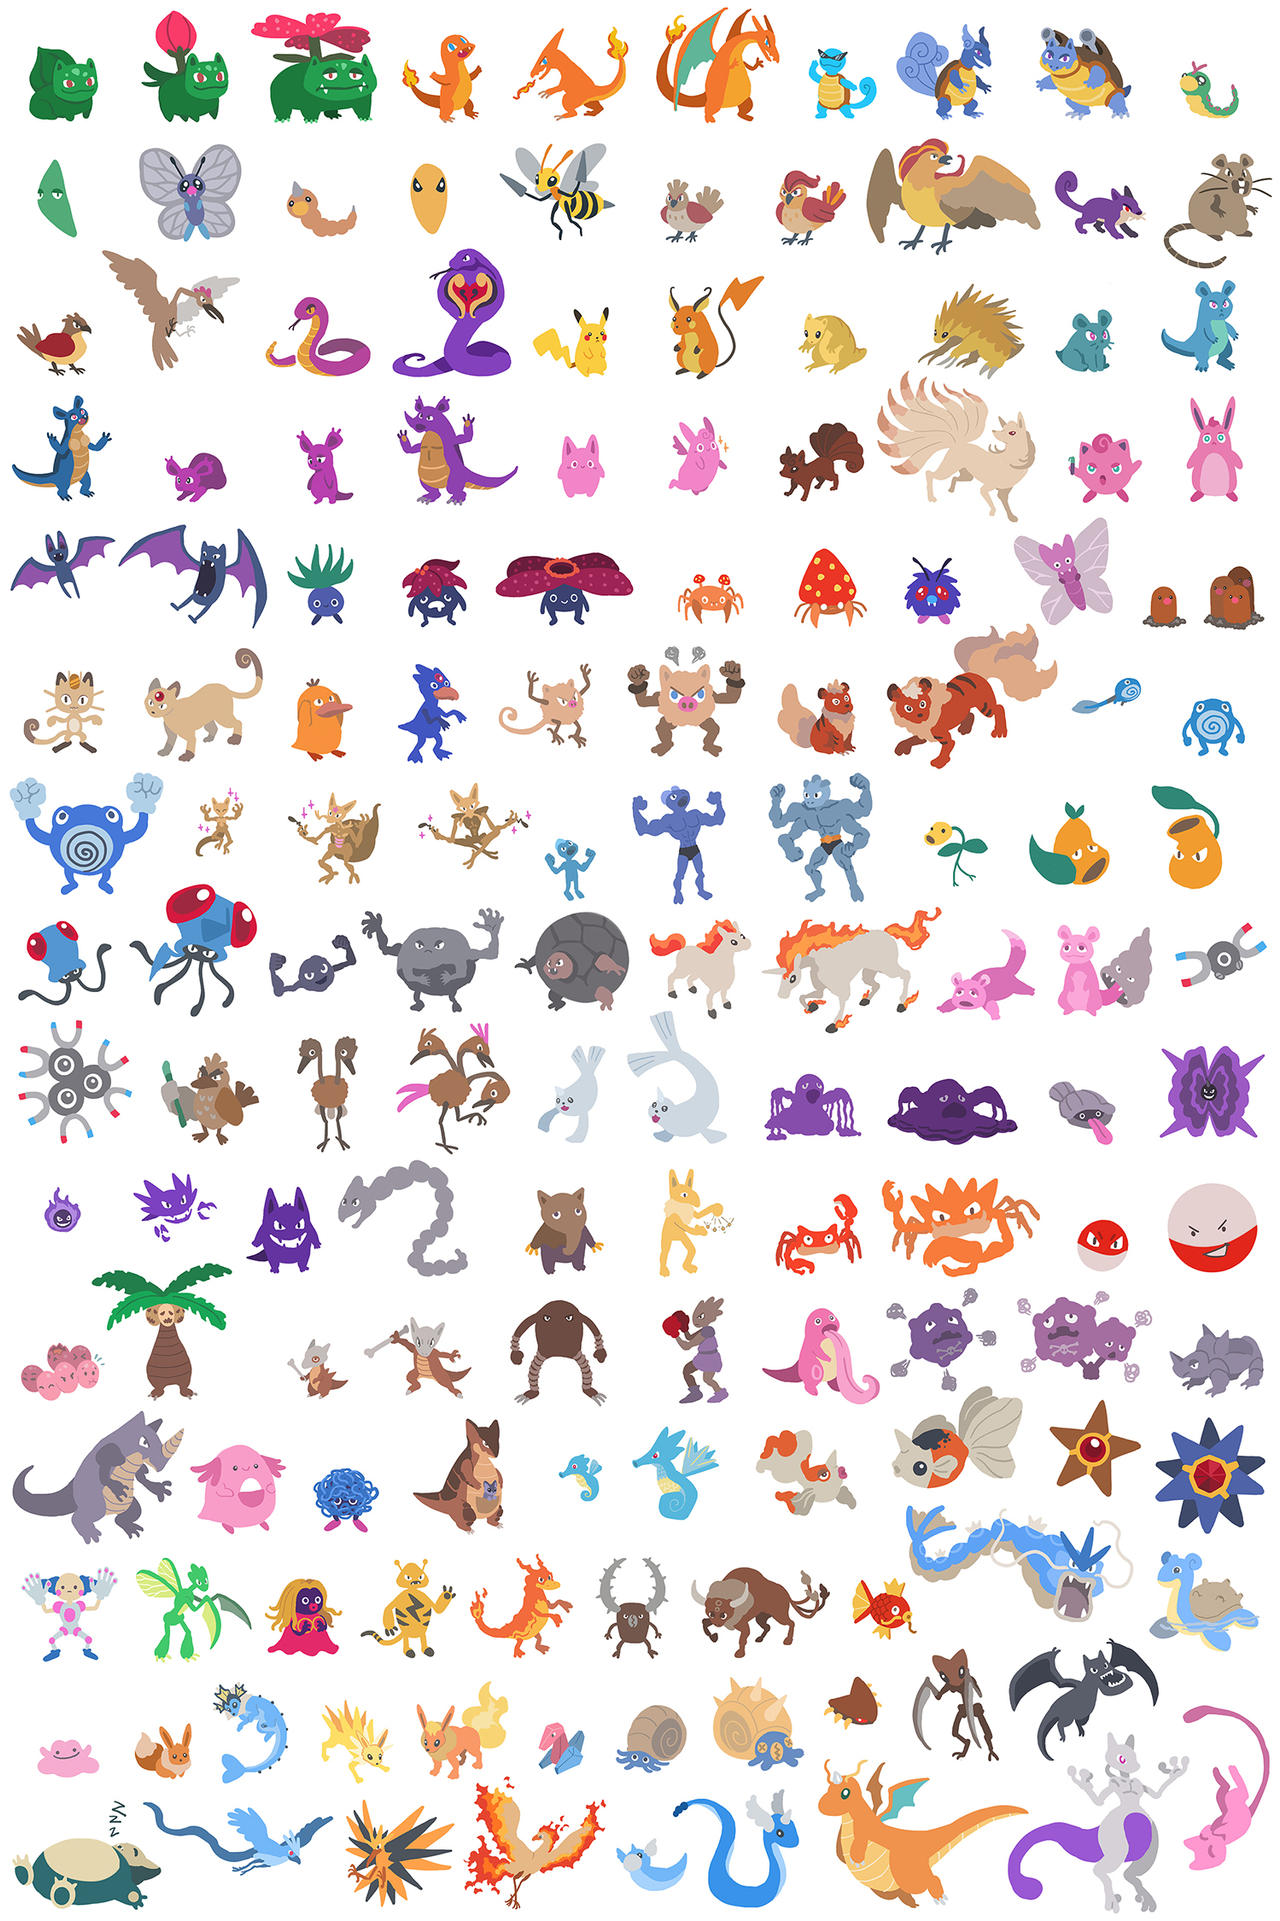 151 Pokemon from Memory by raposavyk on DeviantArt